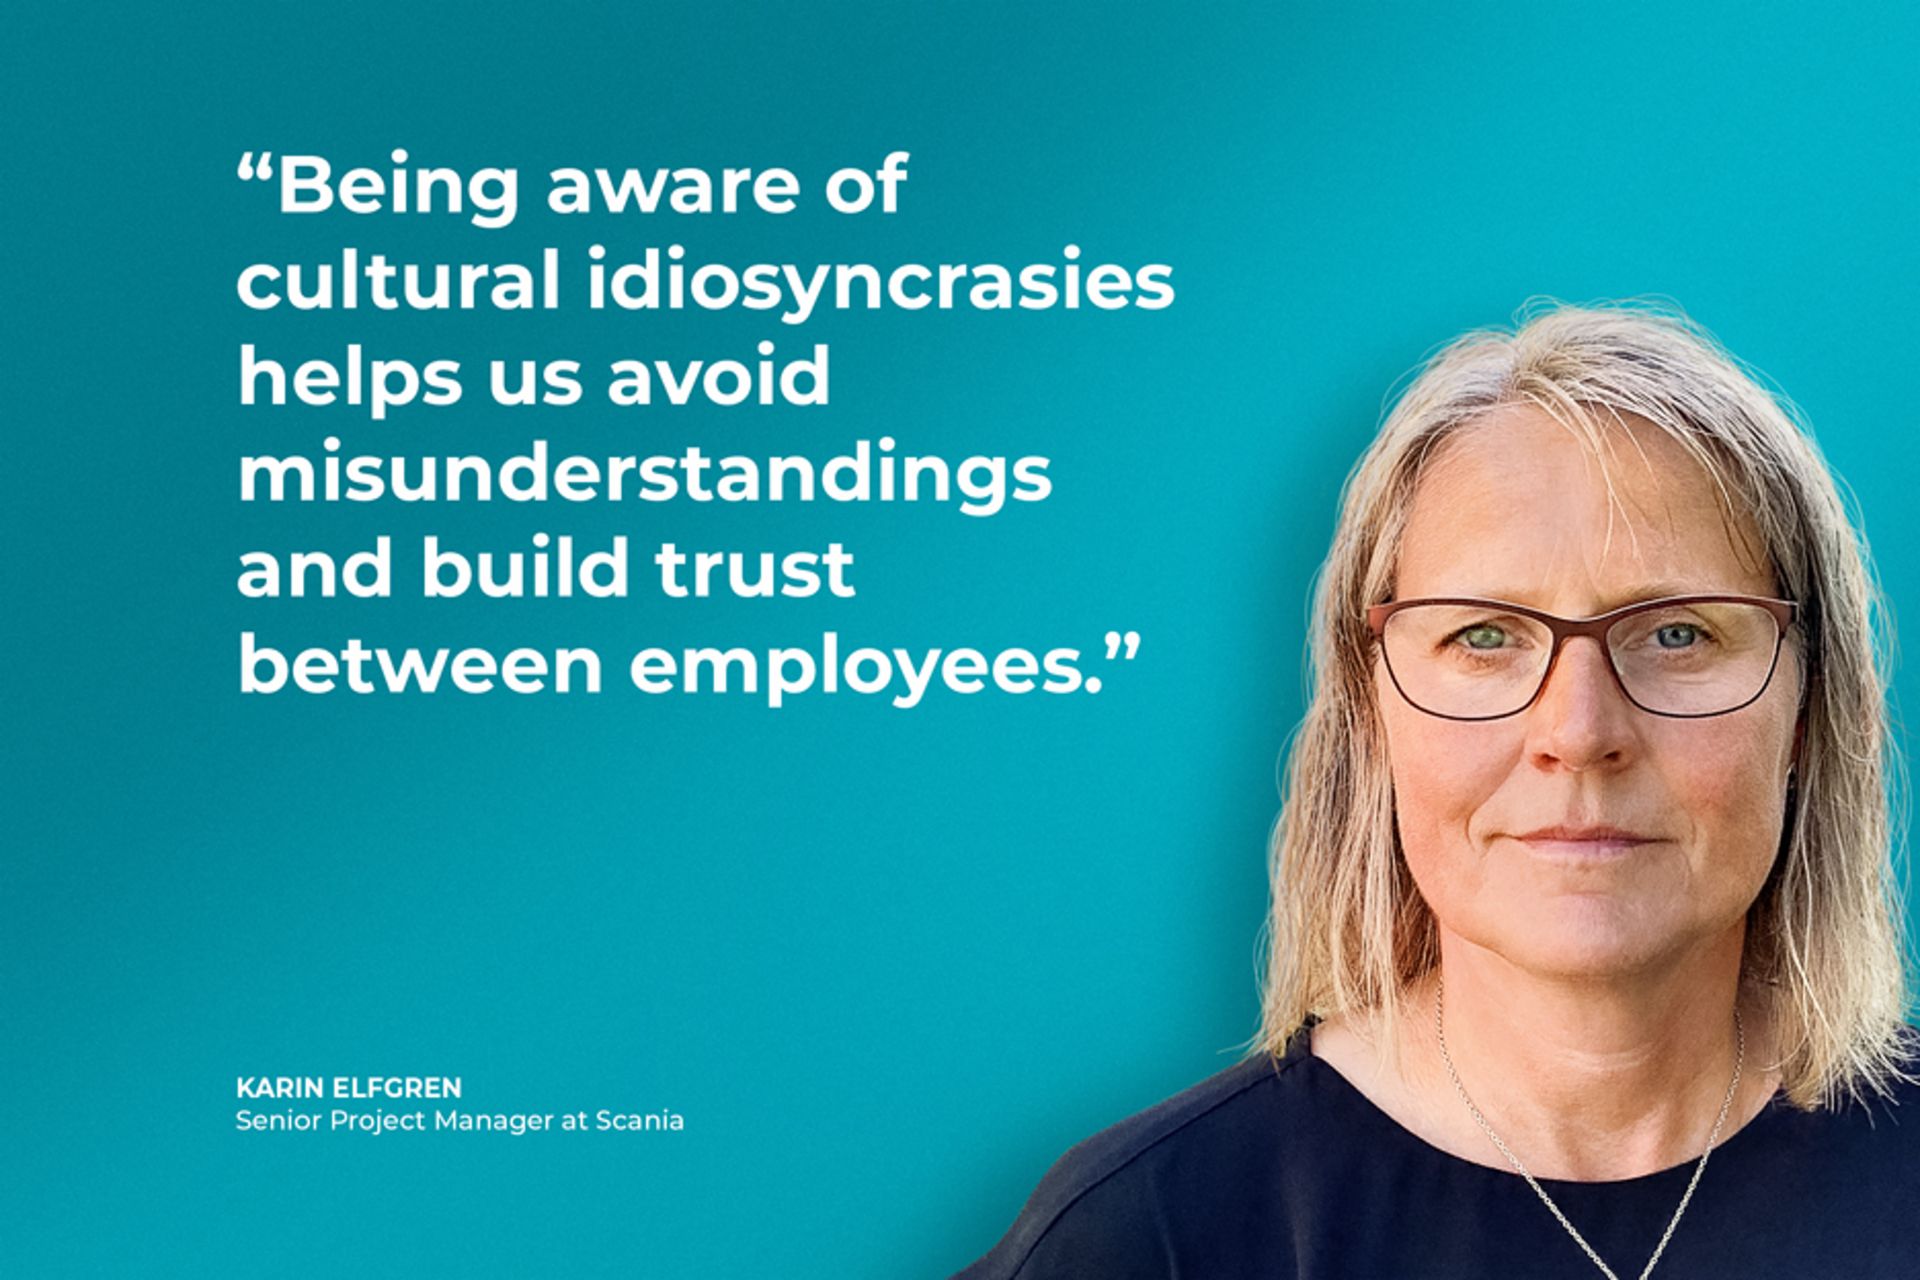 Karin Elfgren says: Being aware of cultural idiosyncrasies helps us avoid misunderstandings and build trust between employees
                 